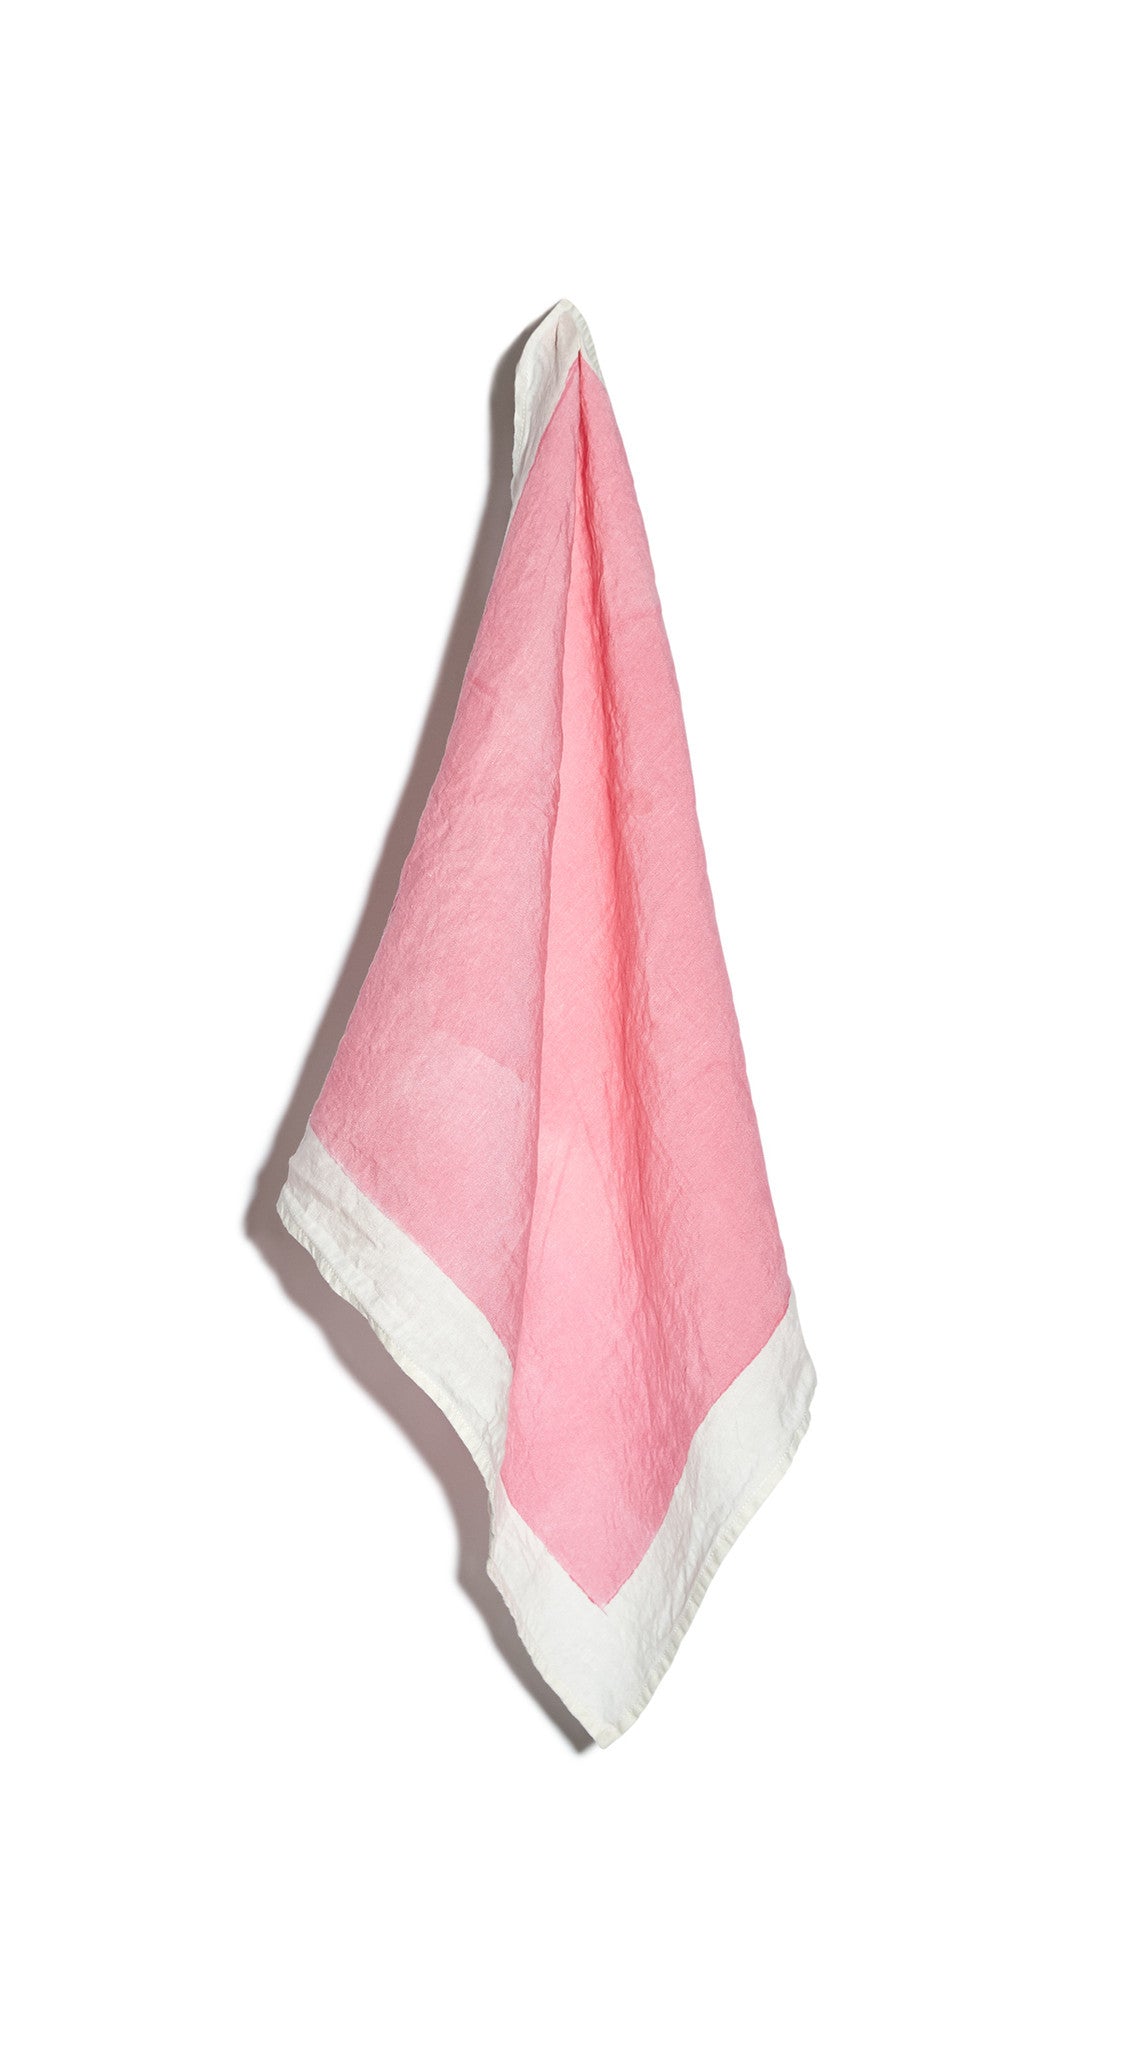 Full Field Linen Napkin in Rose Pink, 50x50cm